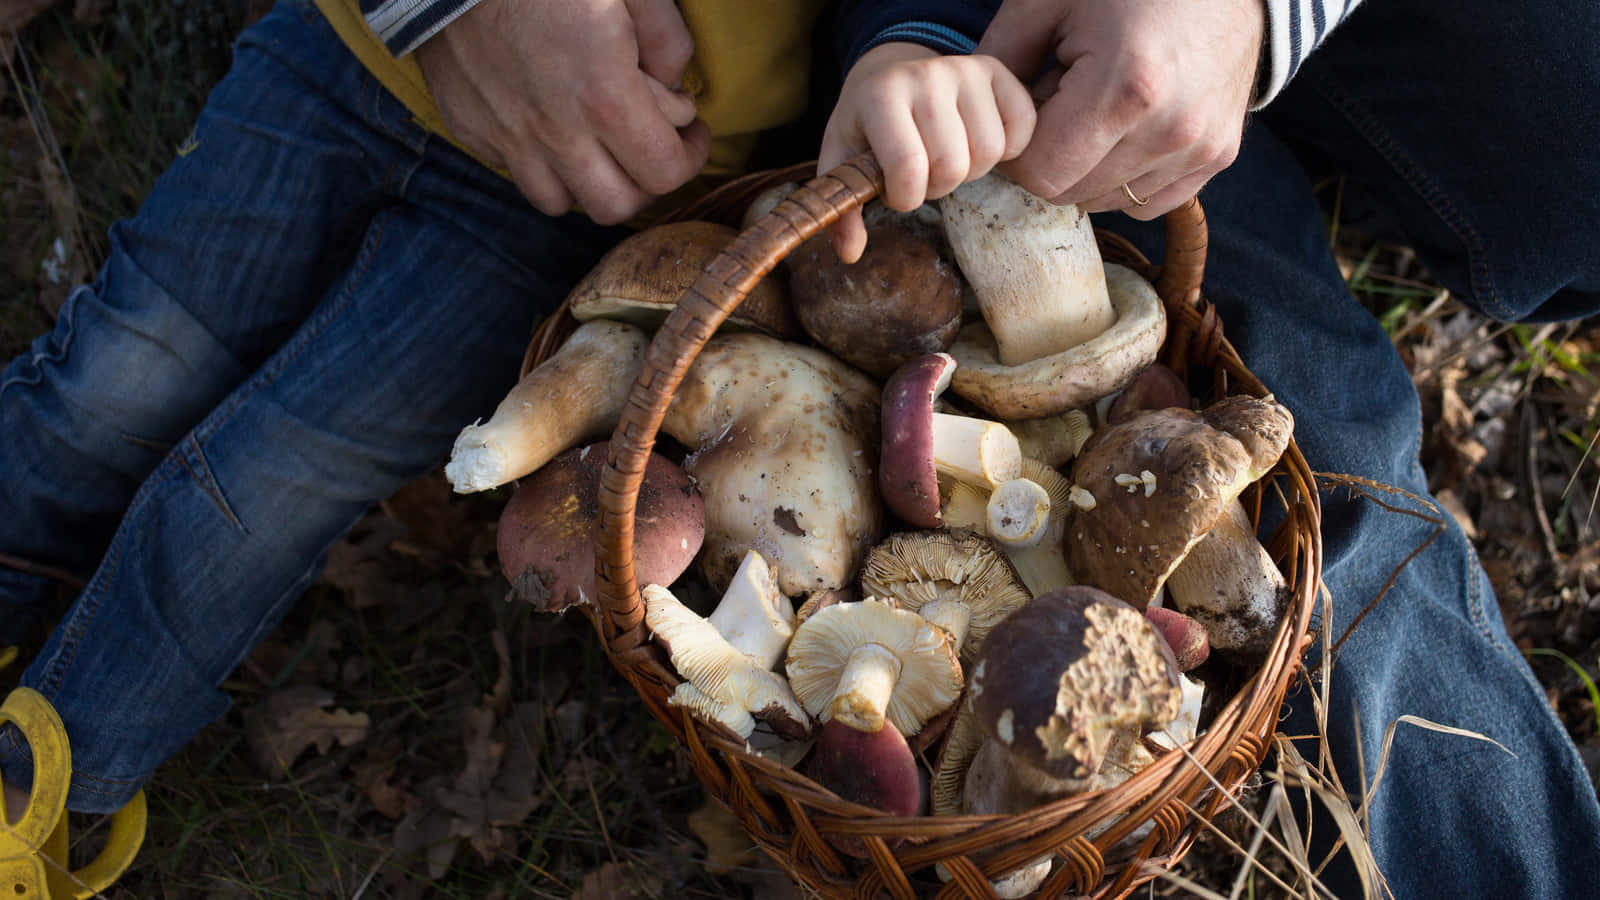 An array of diverse mushroom types